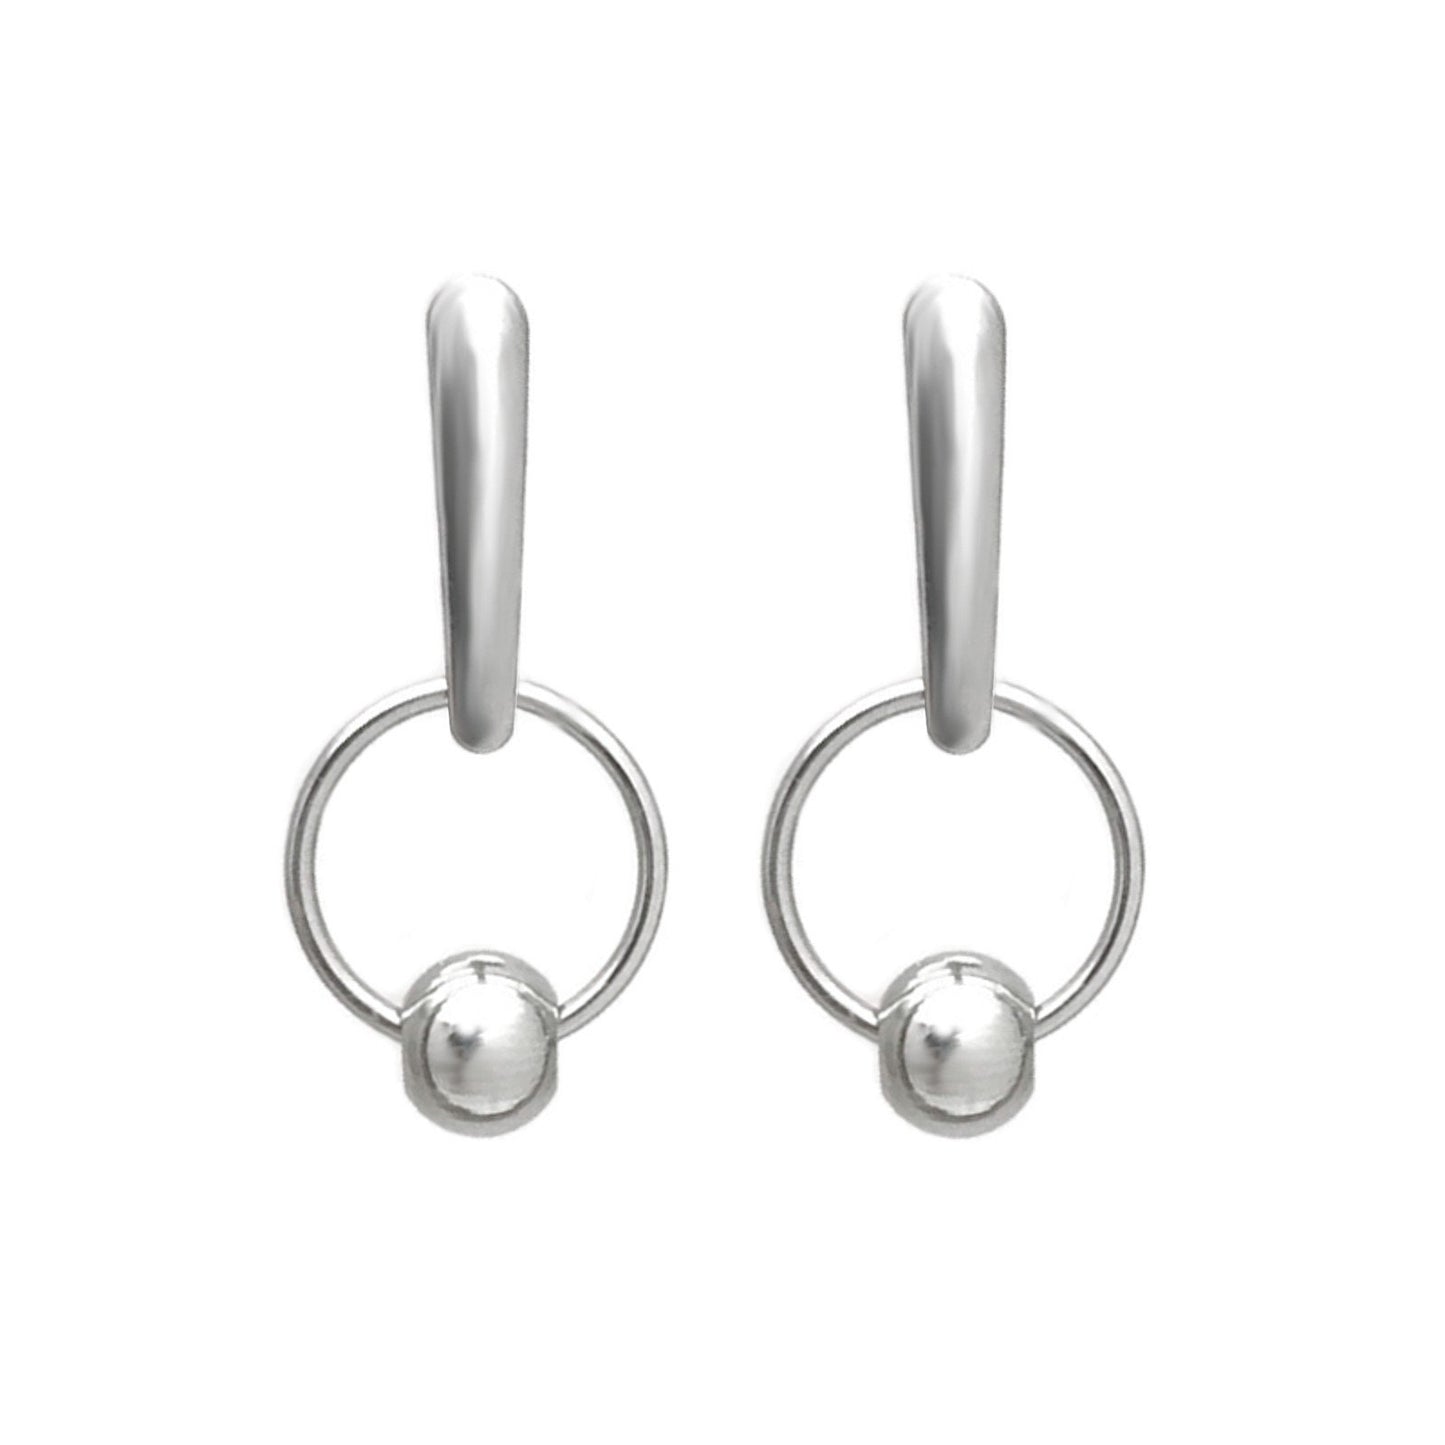 Silver Circle Stud Earrings, Stainless Steel Earrings Dangle, Trendy Jewelry, Gift for Young Woman, Single Bead Earrings for Women